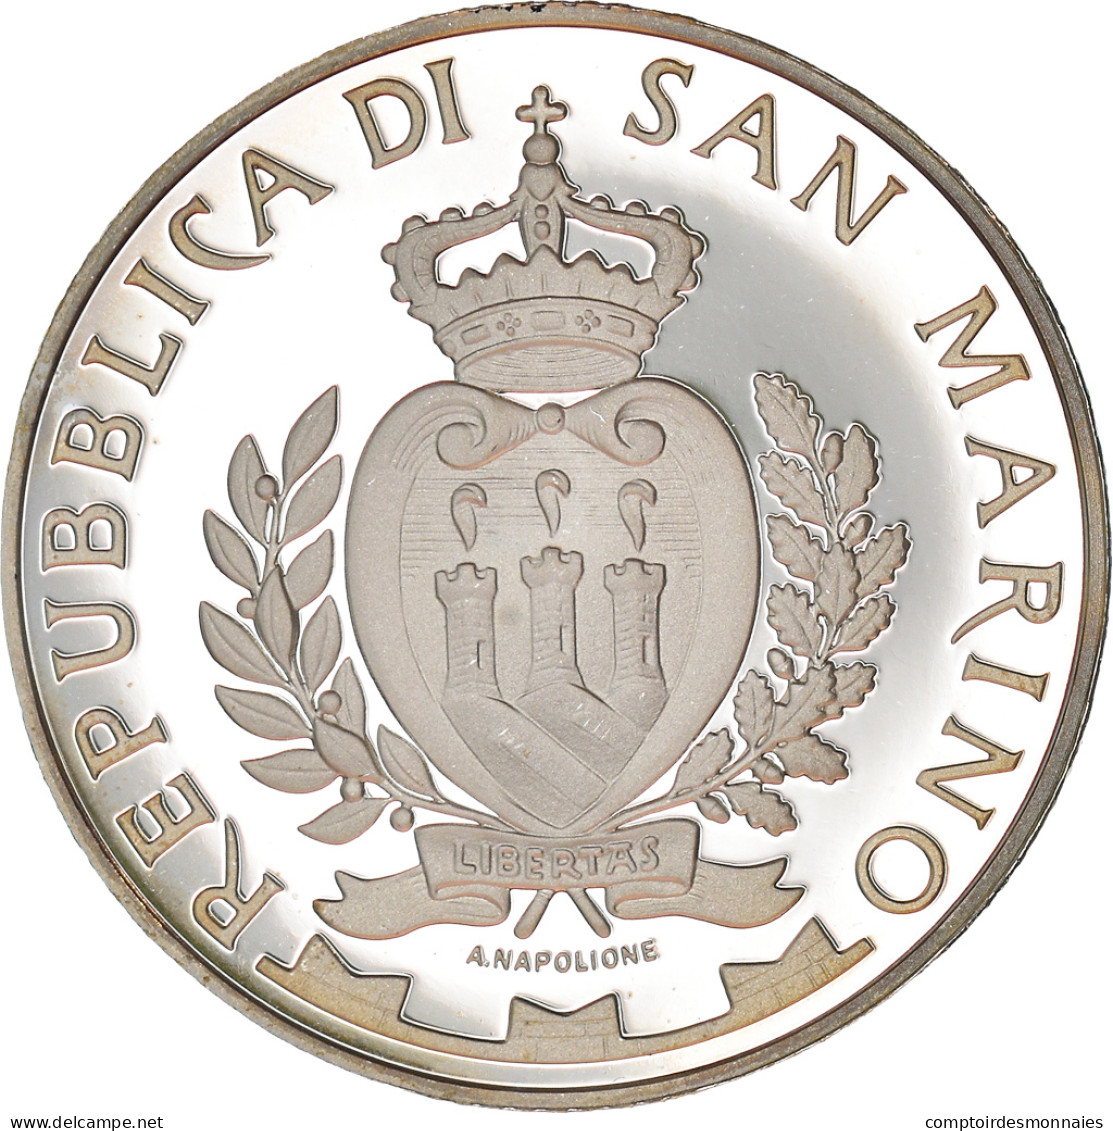 San Marino, 10 Euro, Aligi Sassu, 2012, Proof, FDC, Argent, KM:523 - San Marino